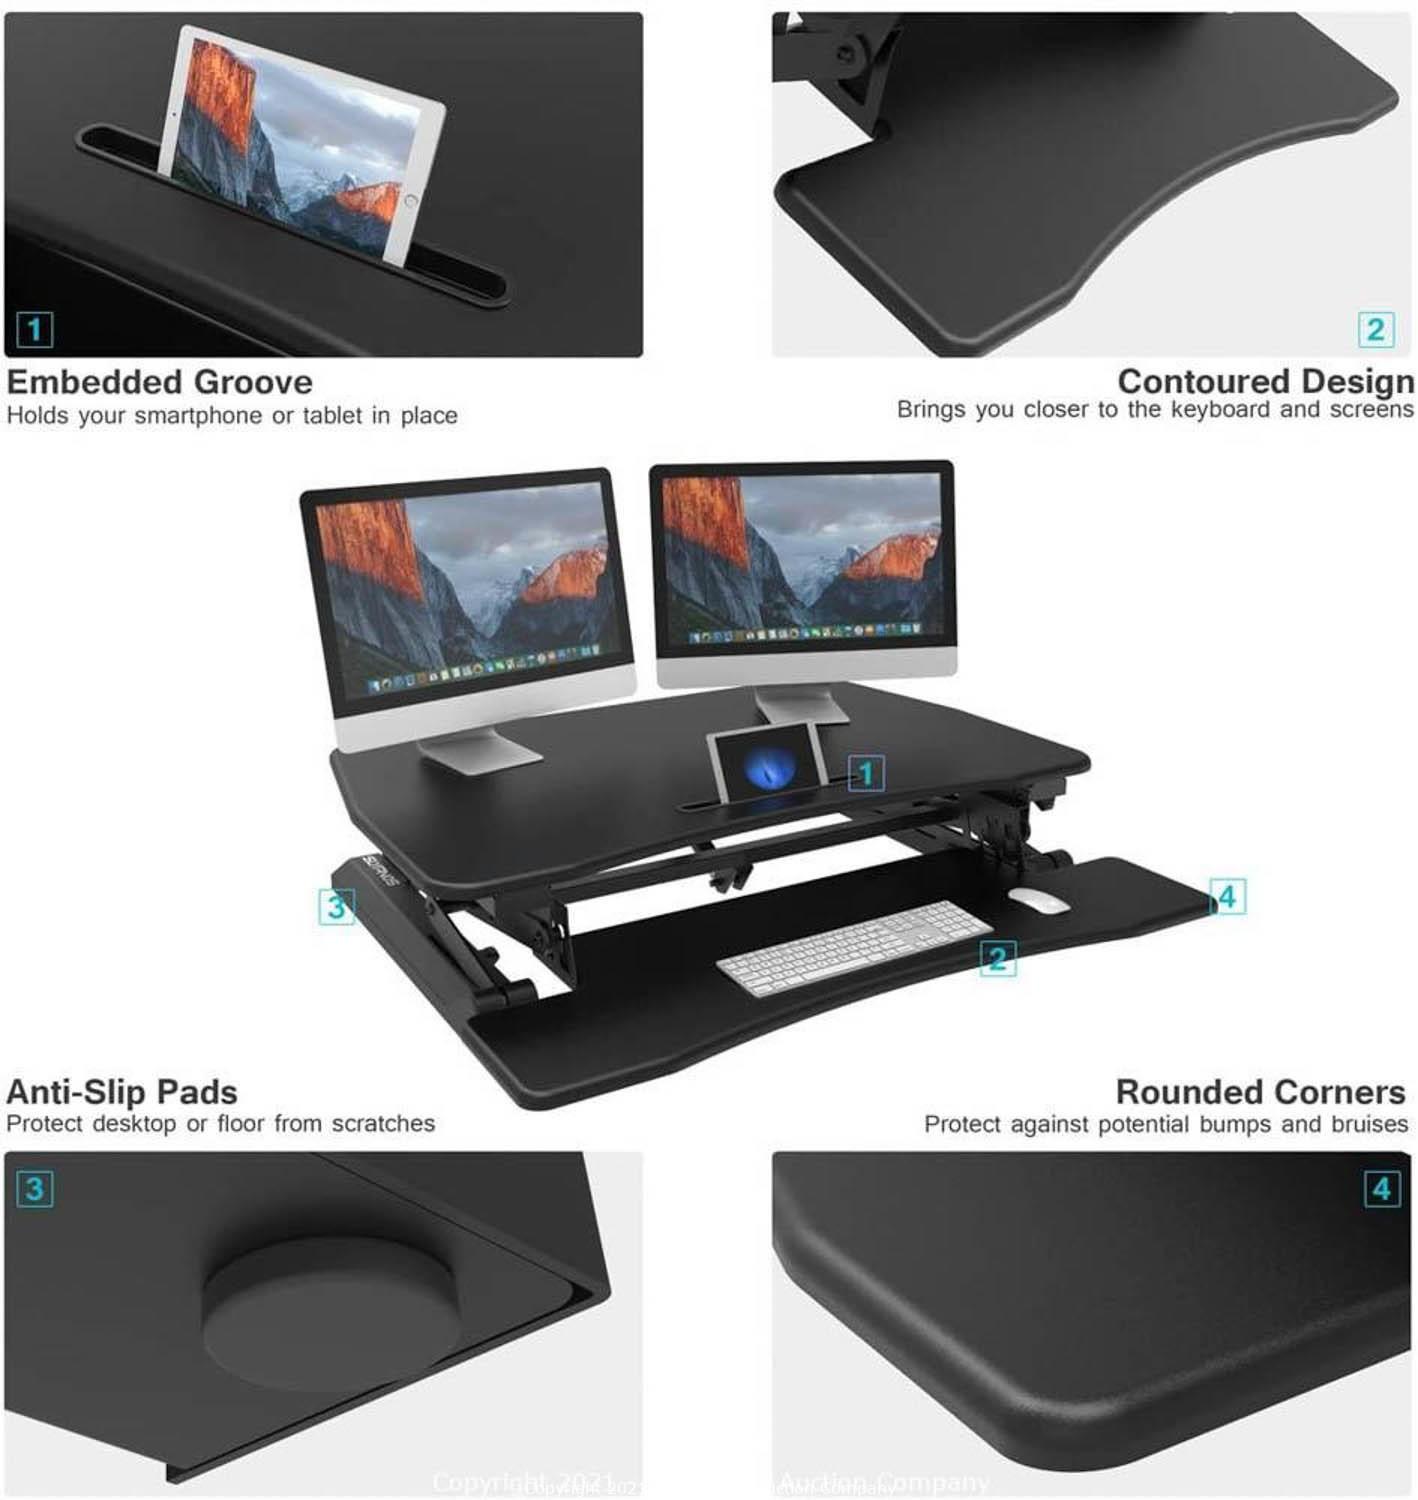 slypnos height adjustable standing desk converter